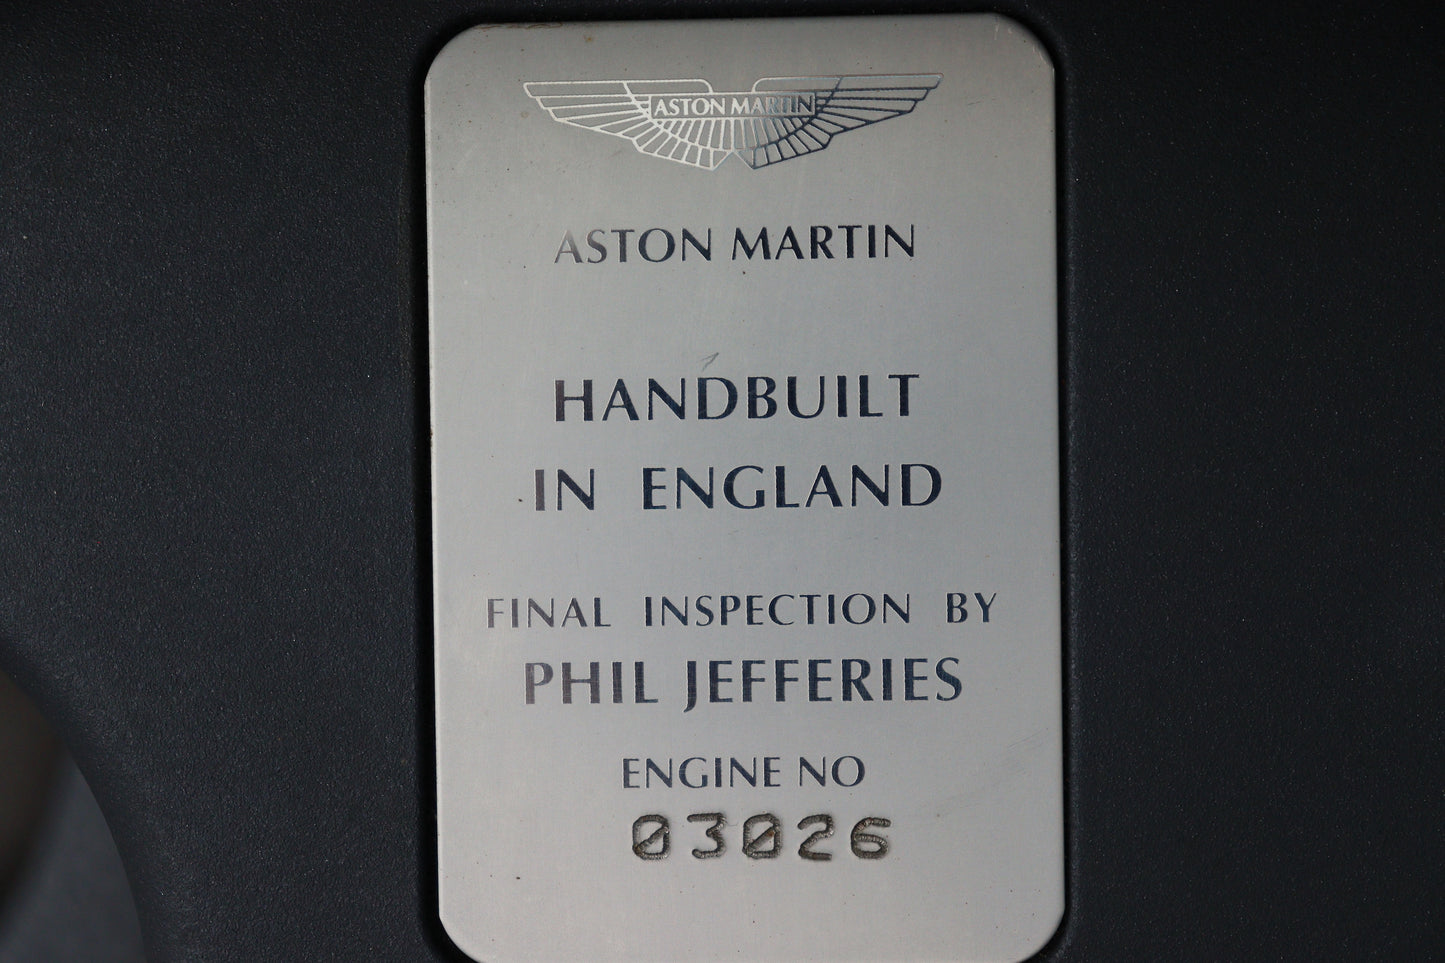 2002 Aston Martin DB7 Vantage - Manual